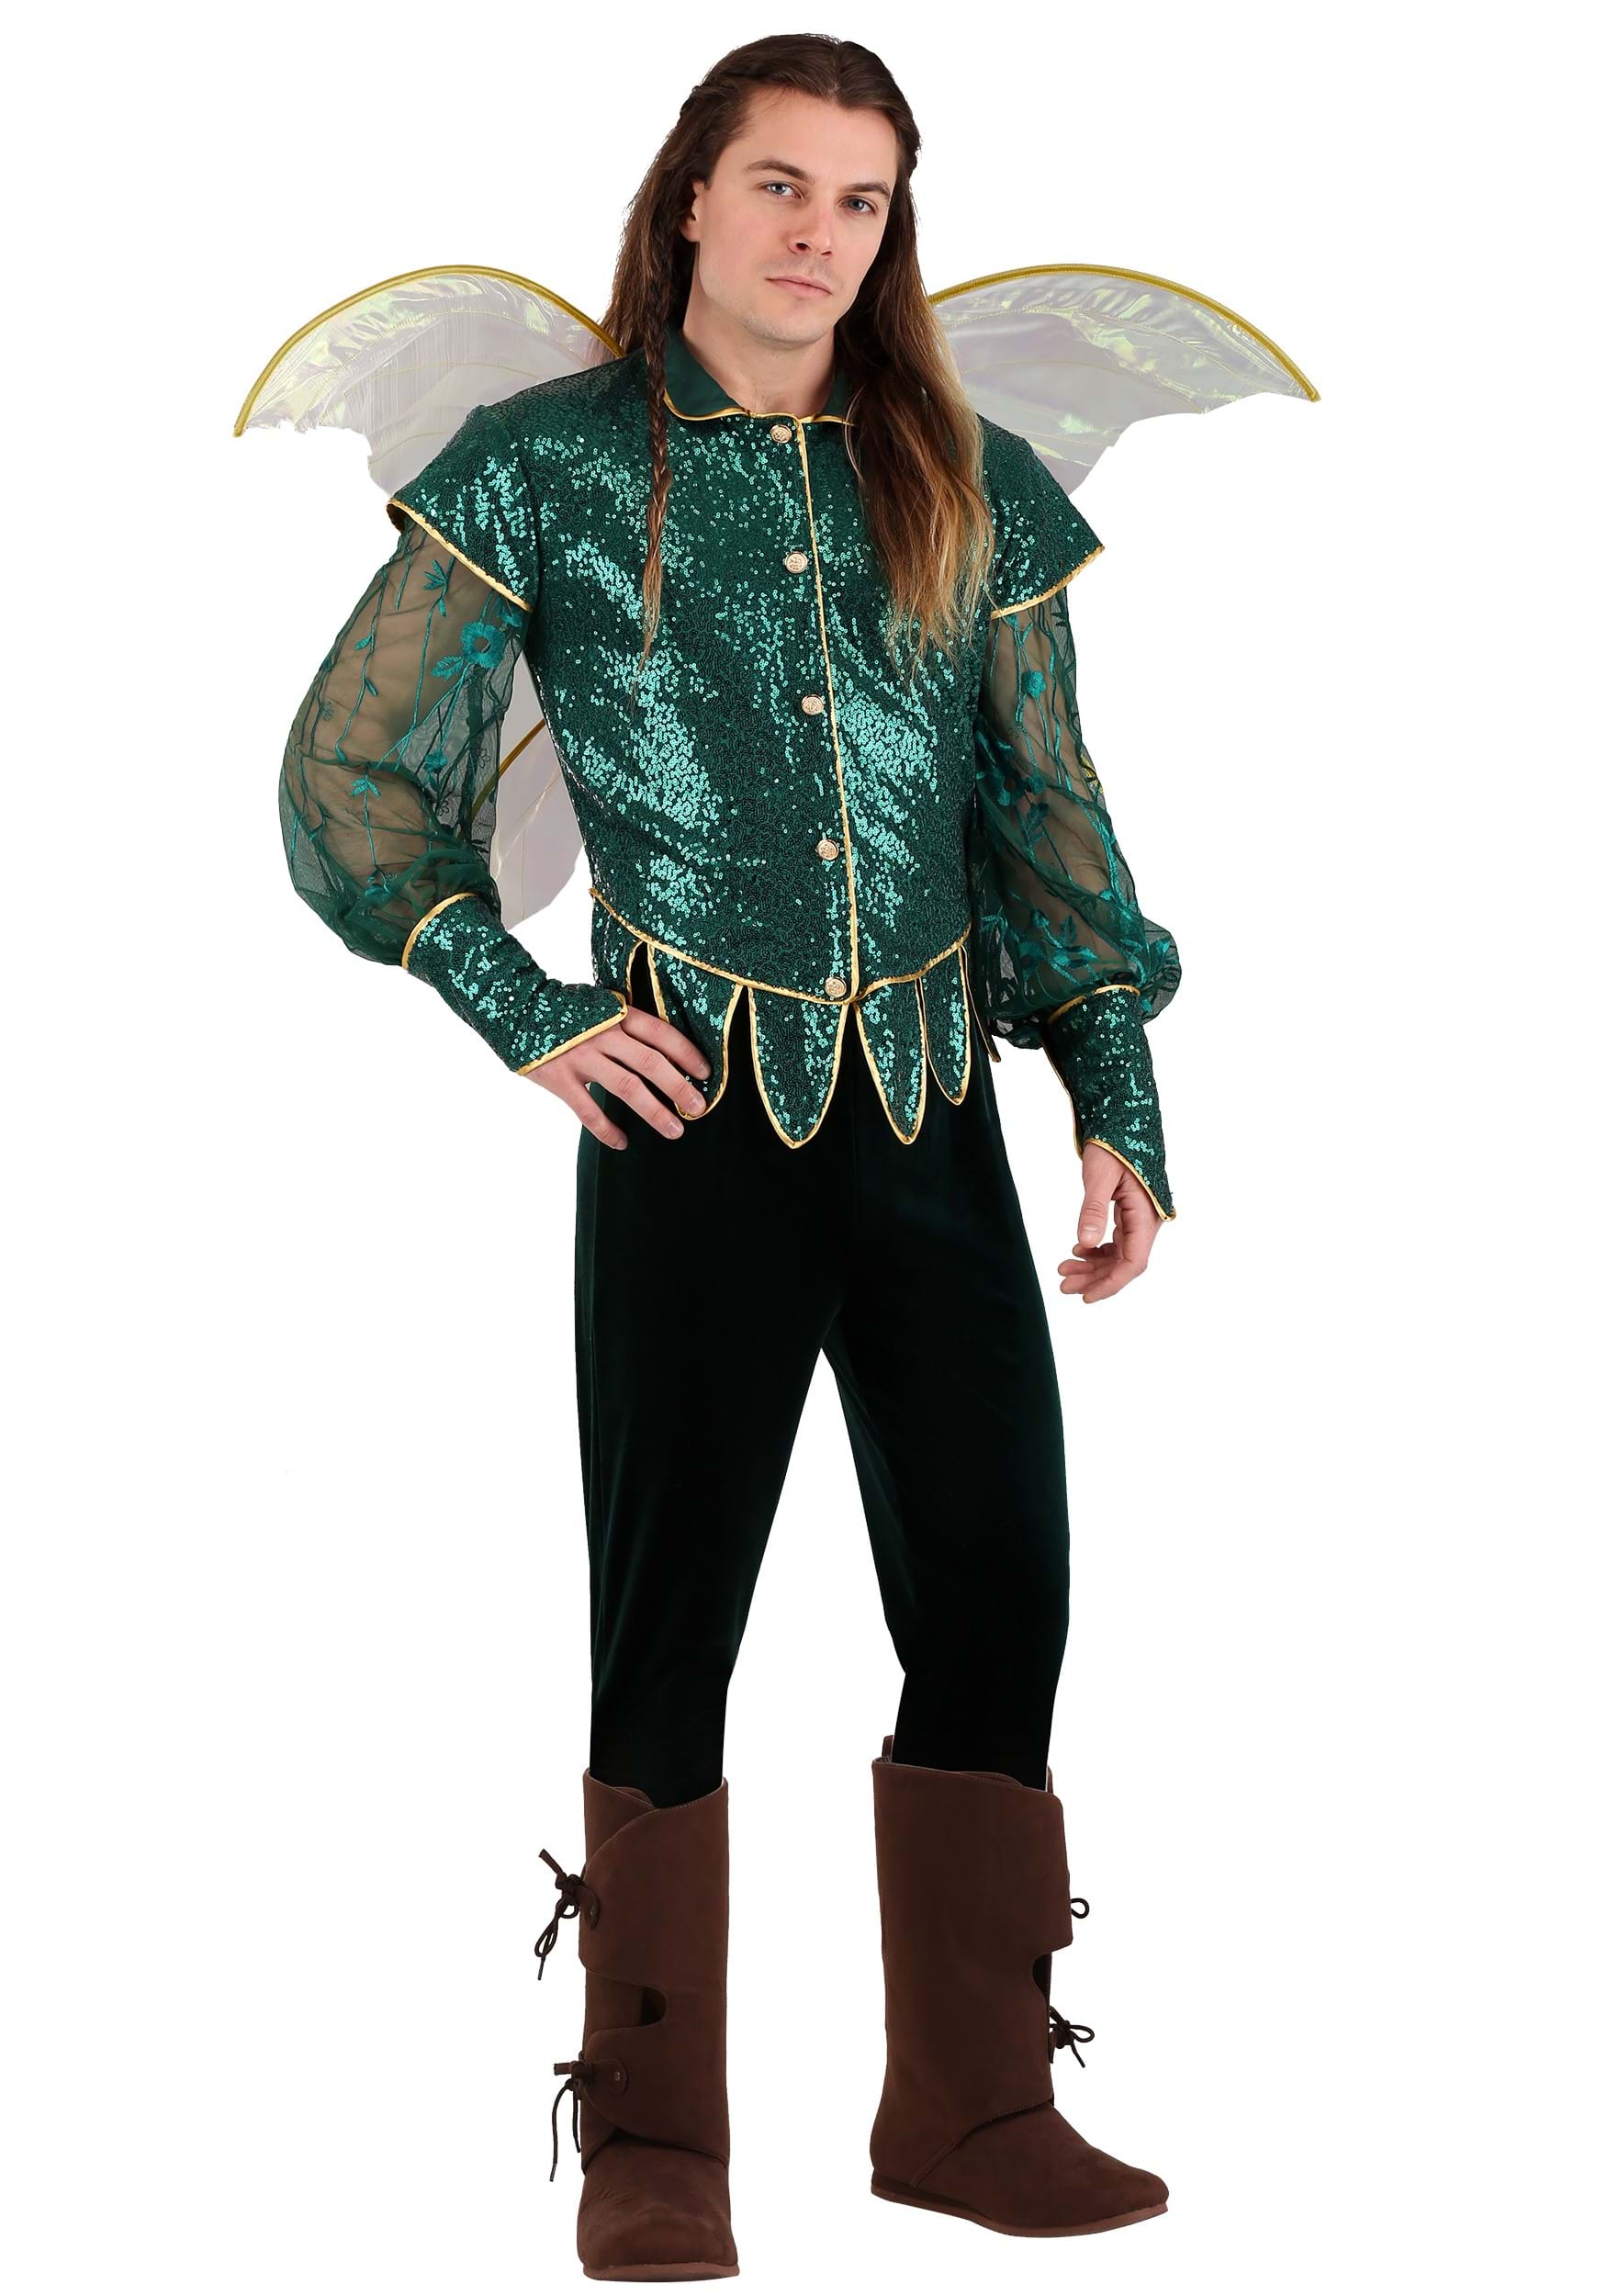 Forest Fairy Costume for Men